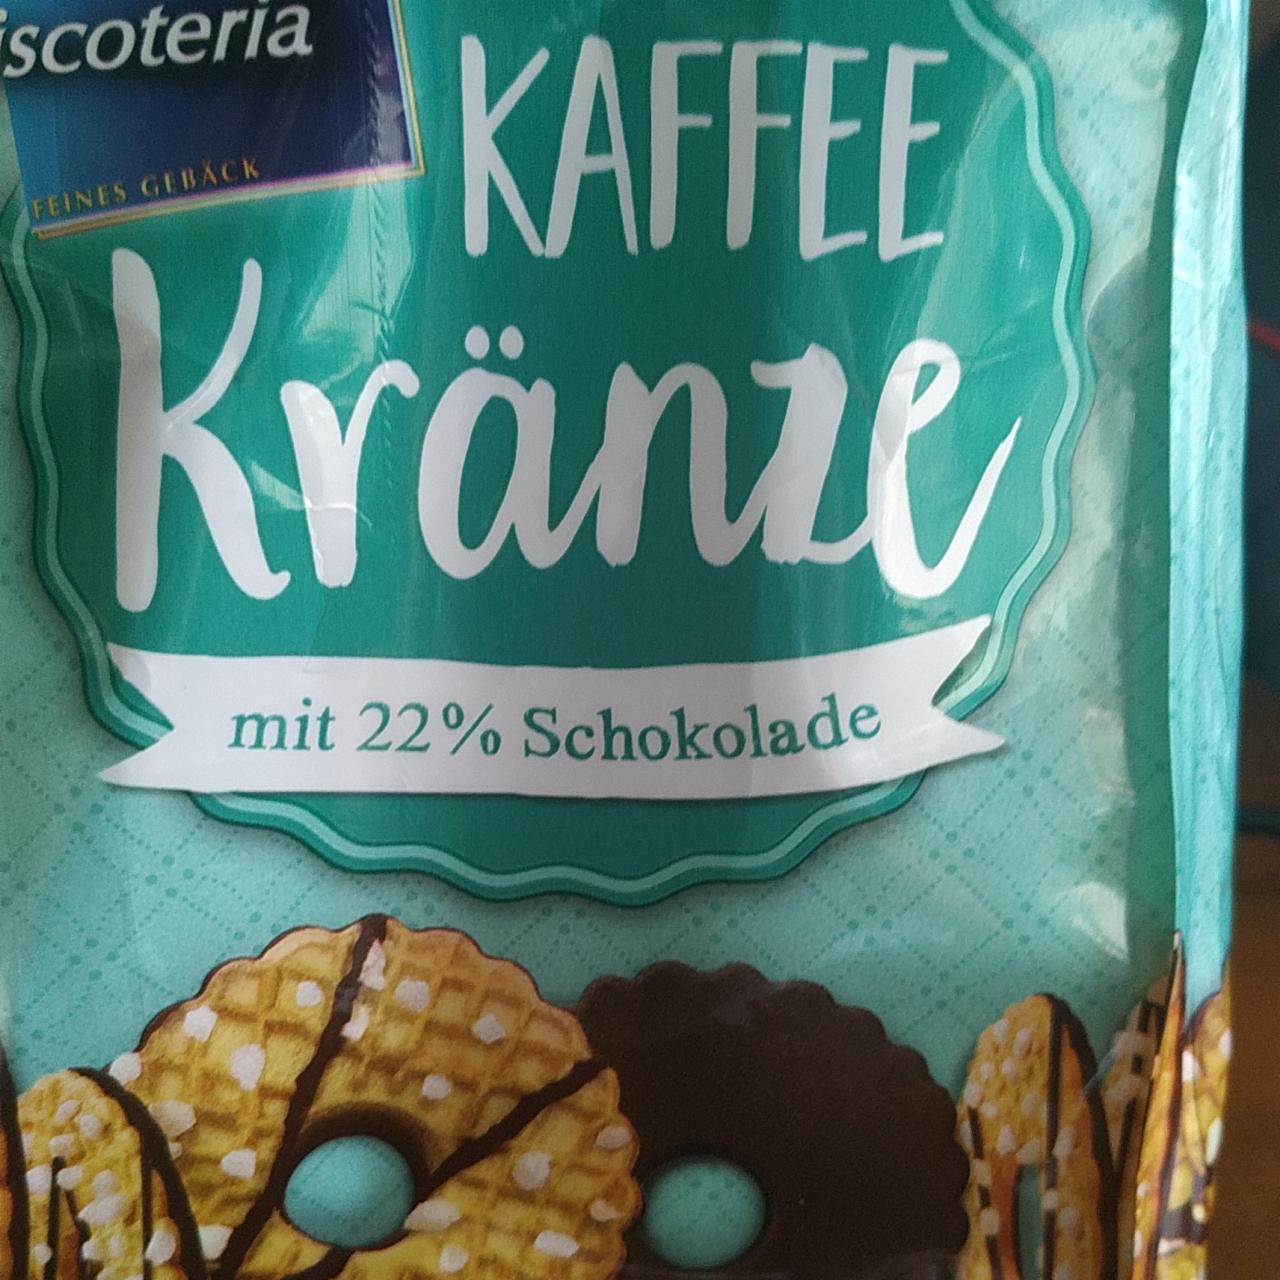 Фото - Печенье Kaffee Kränze Biscoteria